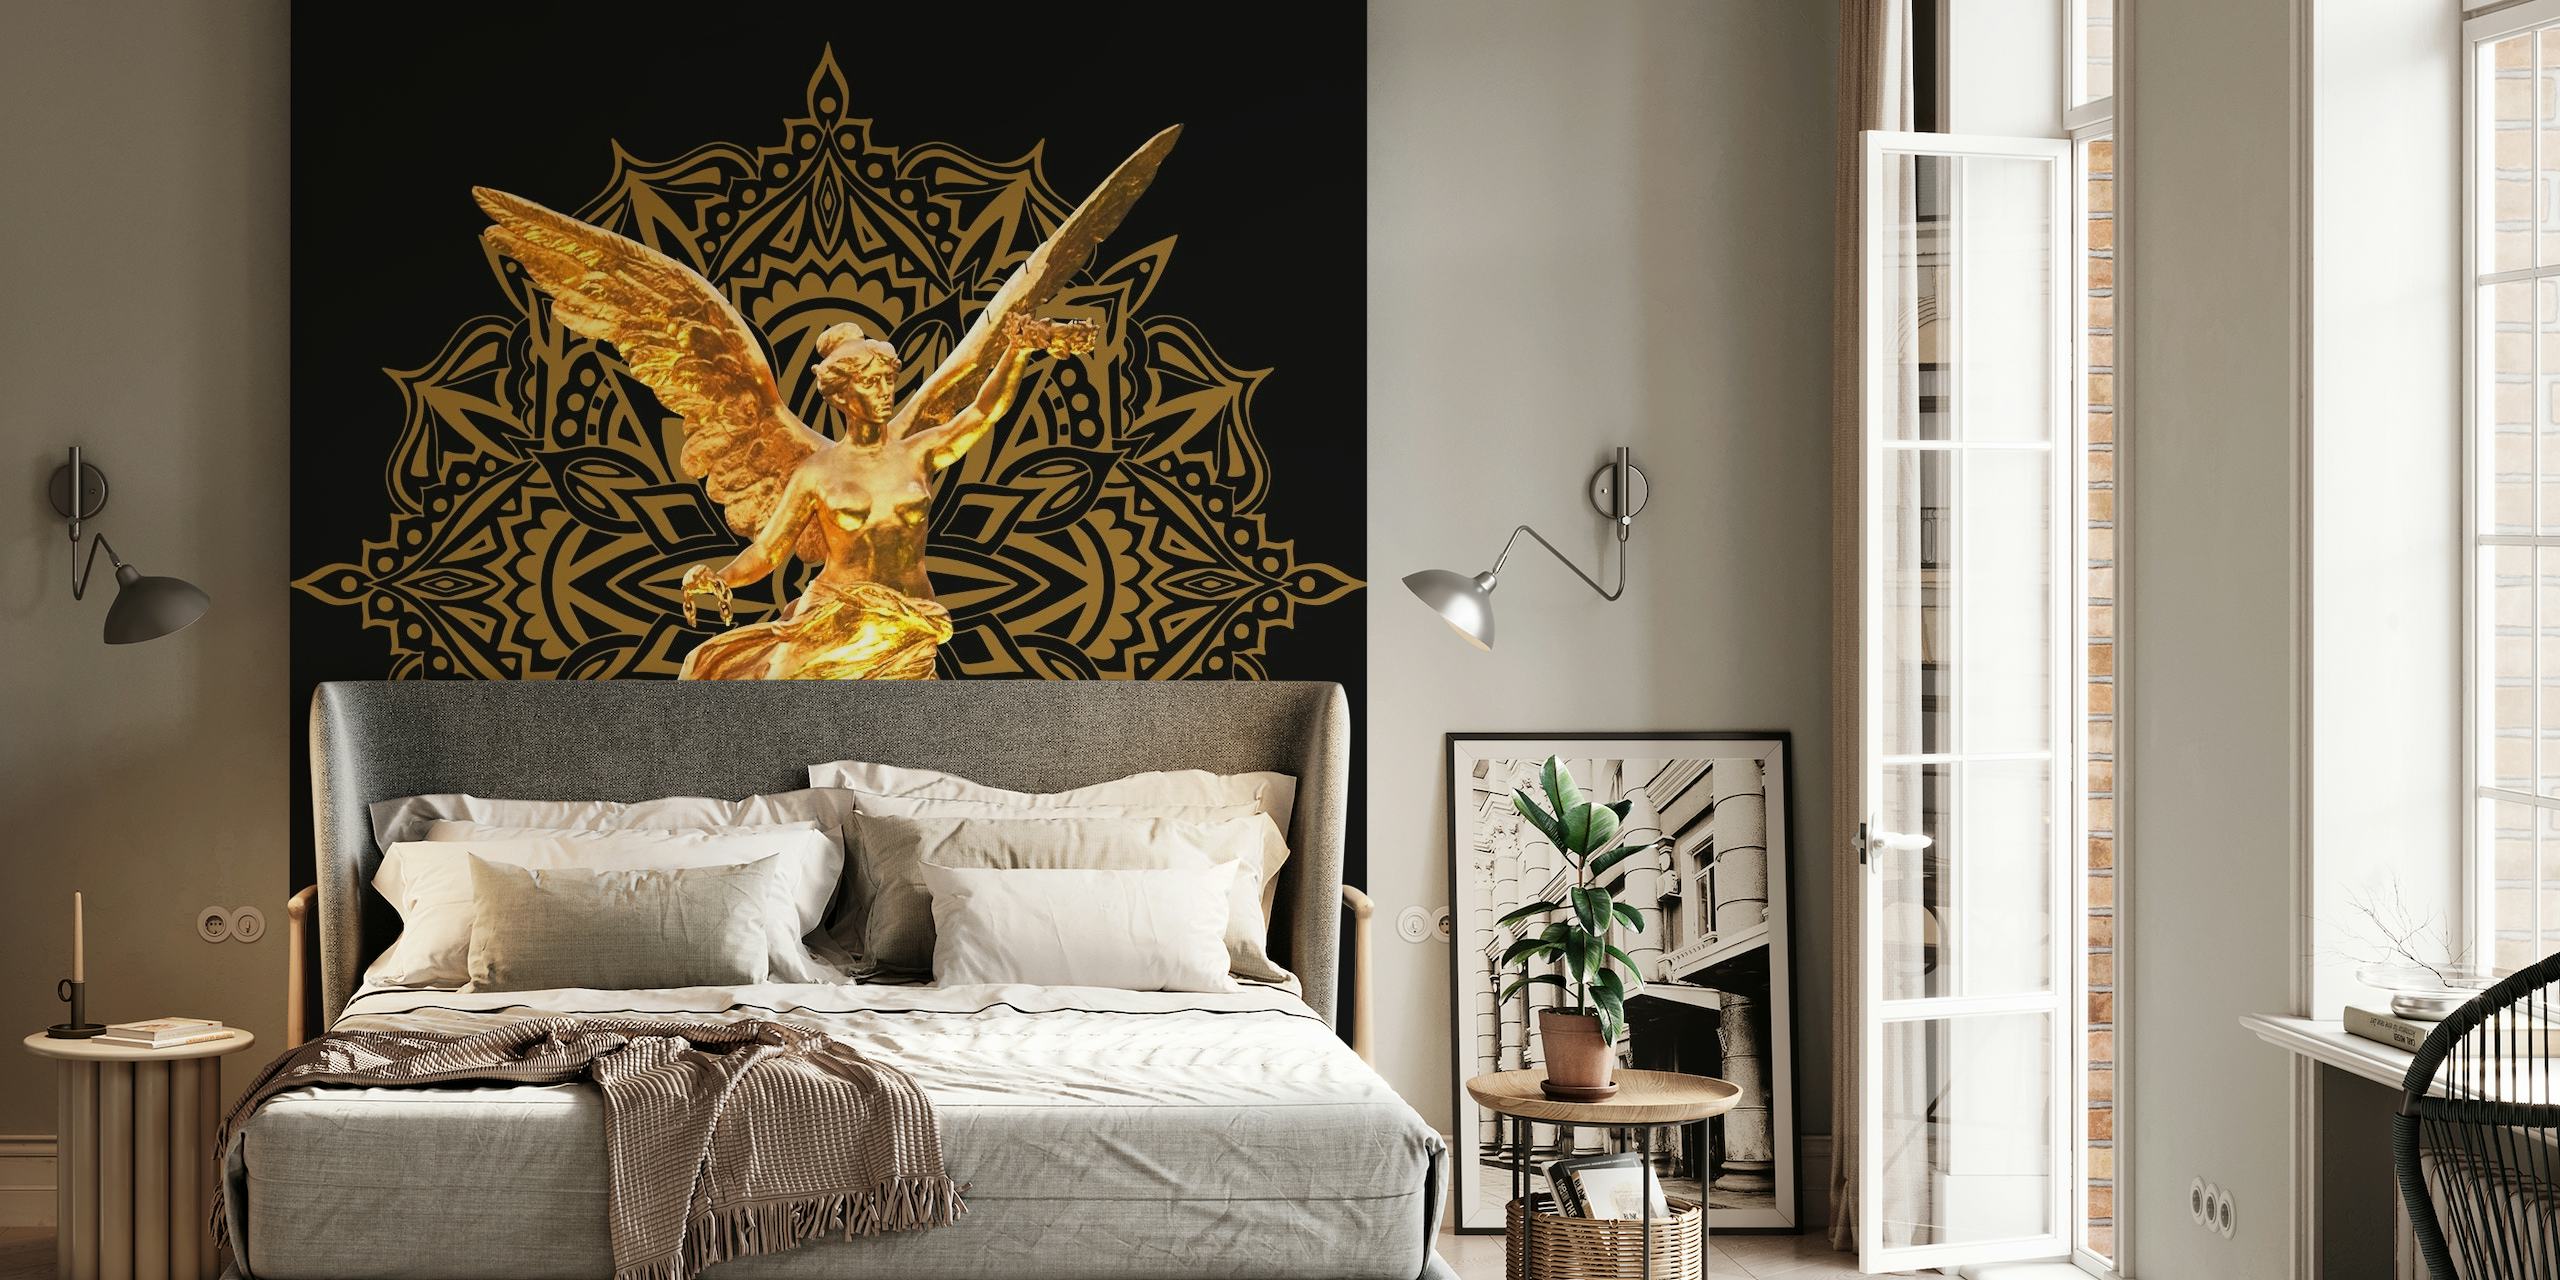 Gouden Engel muurschildering met mandala-patroon